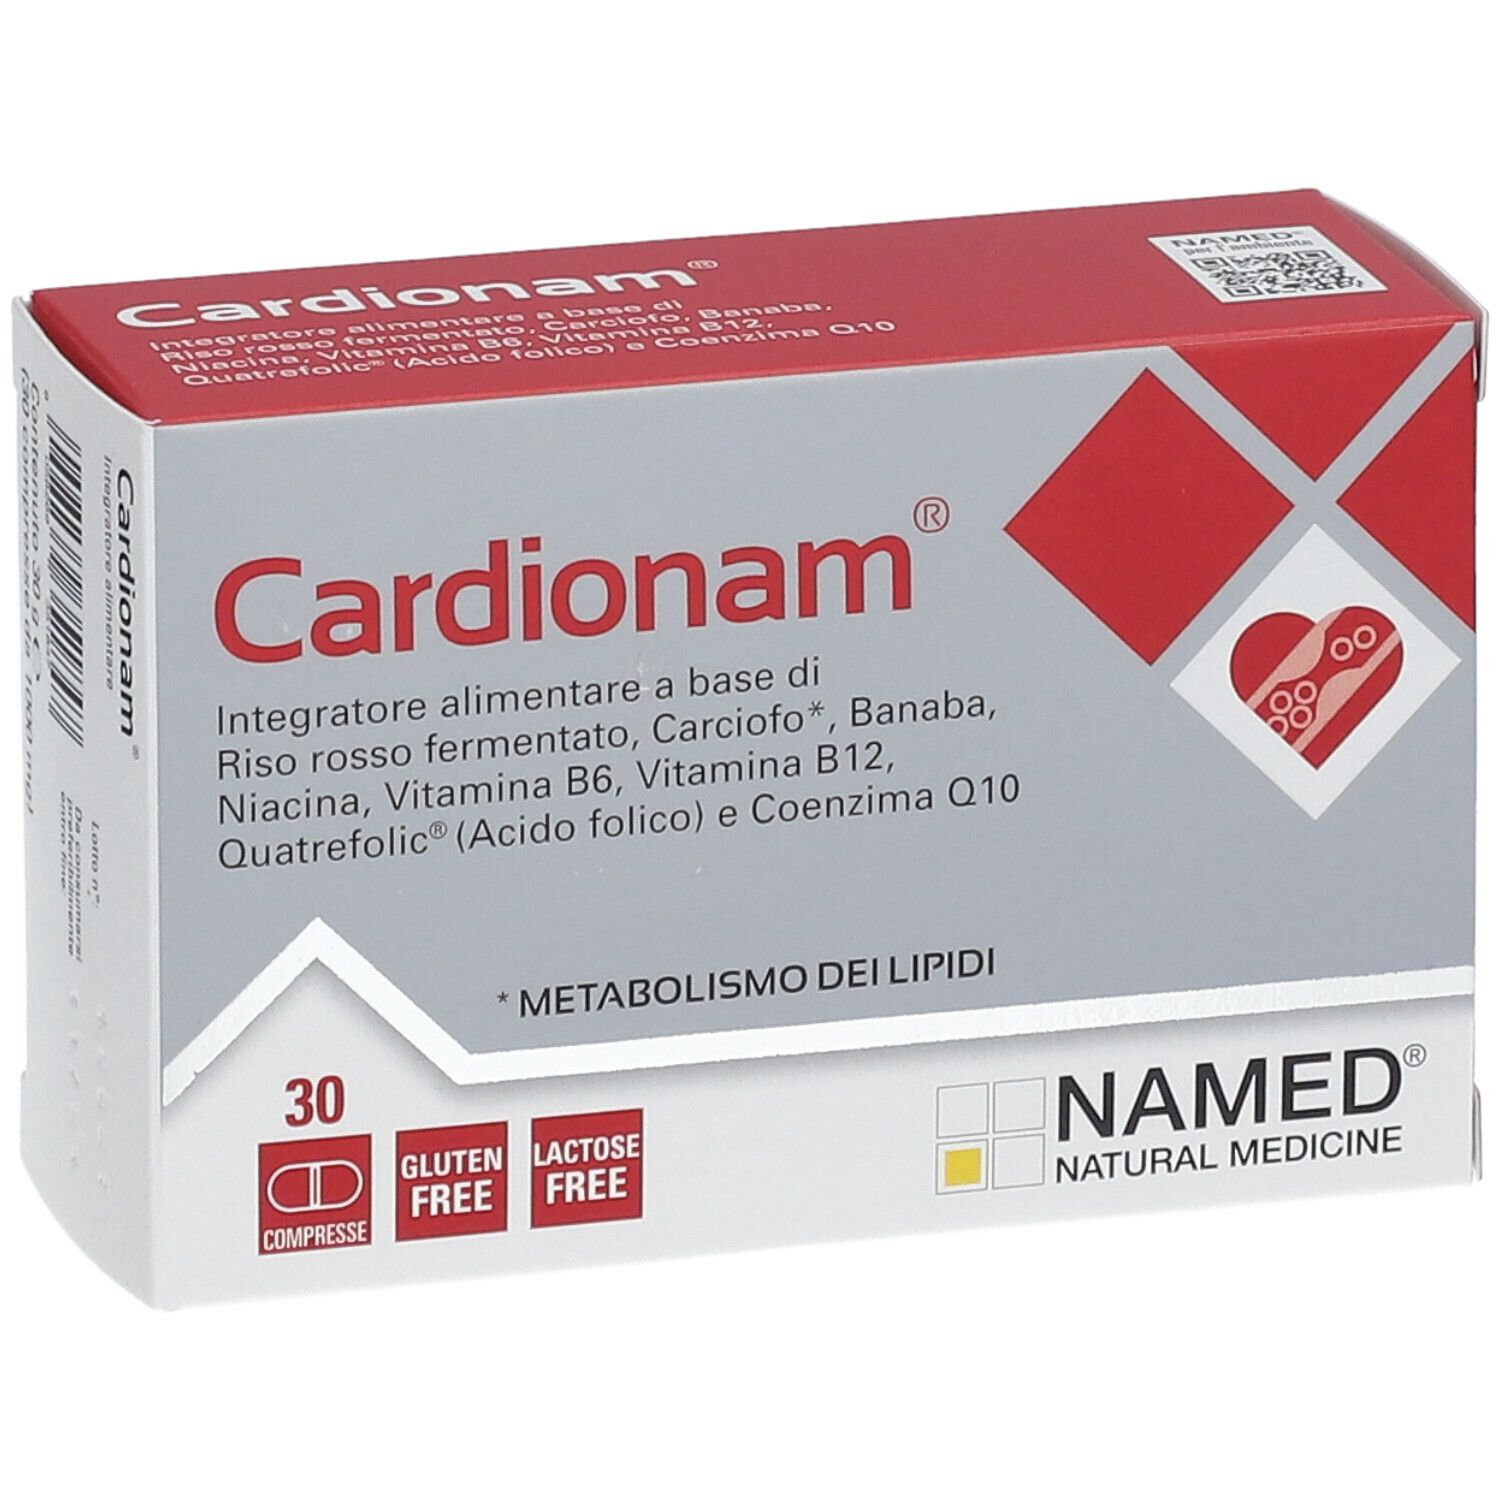 NAMED® Cardionam